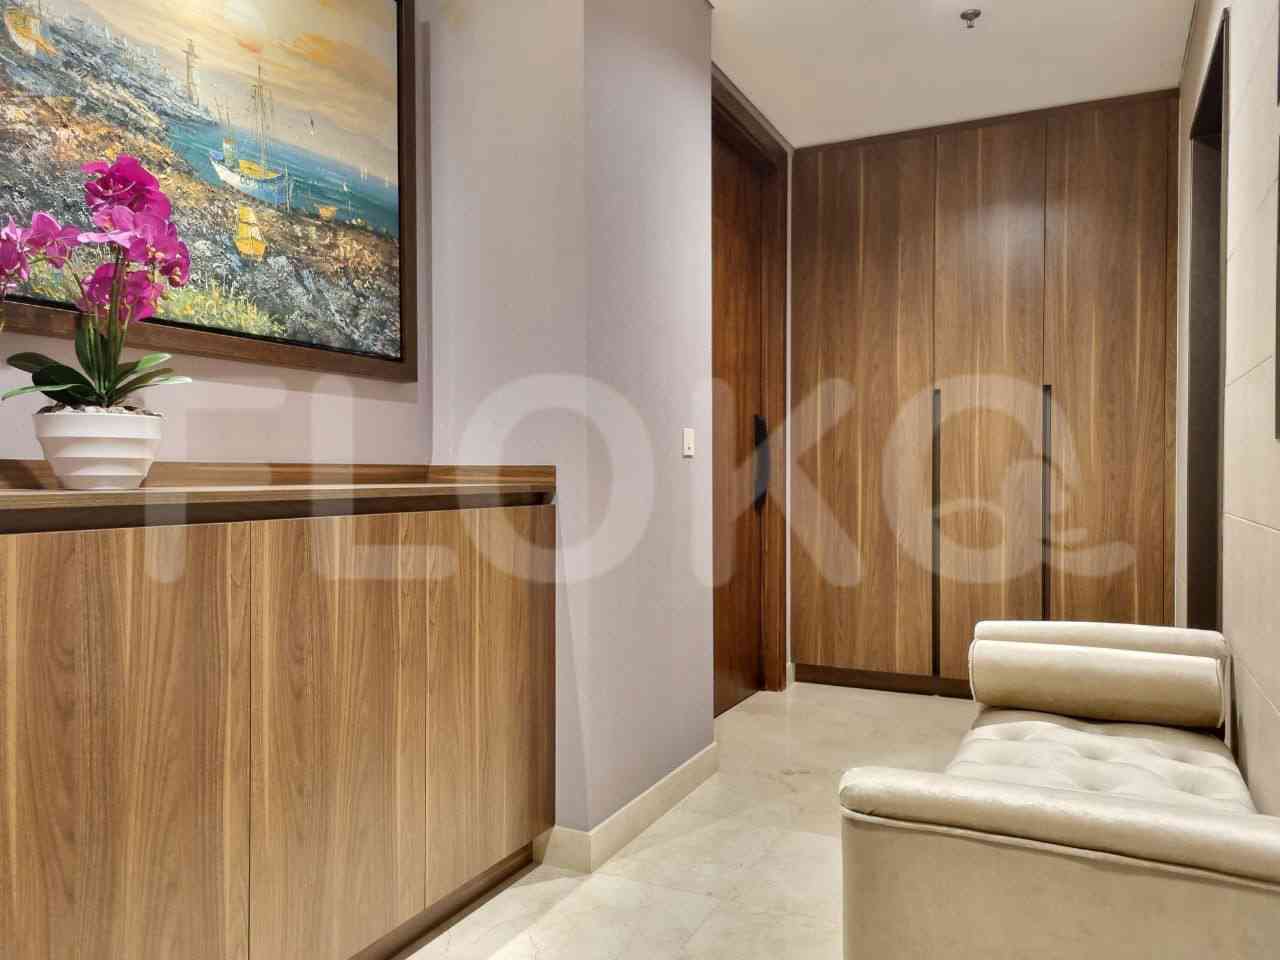 2 Bedroom on 16th Floor for Rent in Apartemen Branz Simatupang - ftb57f 4